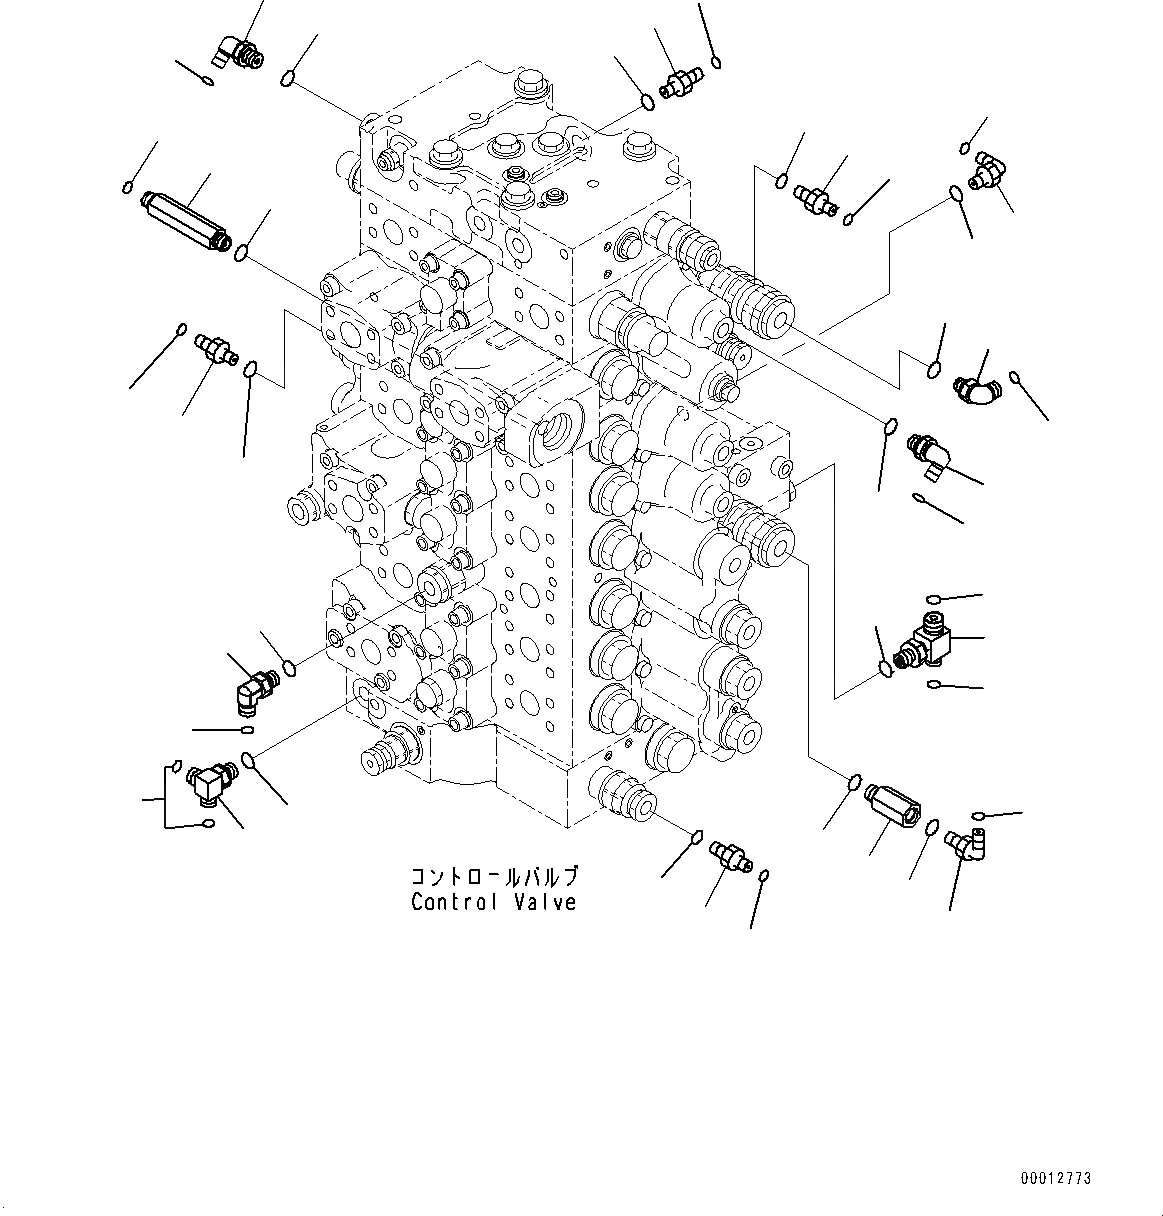 Схема запчастей Komatsu PC450LC-8 - УПРАВЛЯЮЩ. КЛАПАН, УПРАВЛЯЮЩ. КЛАПАН КОМПОНЕНТЫ (/) (№77-) УПРАВЛЯЮЩ. КЛАПАН, -СЕРВИСНЫЙ КЛАПАН